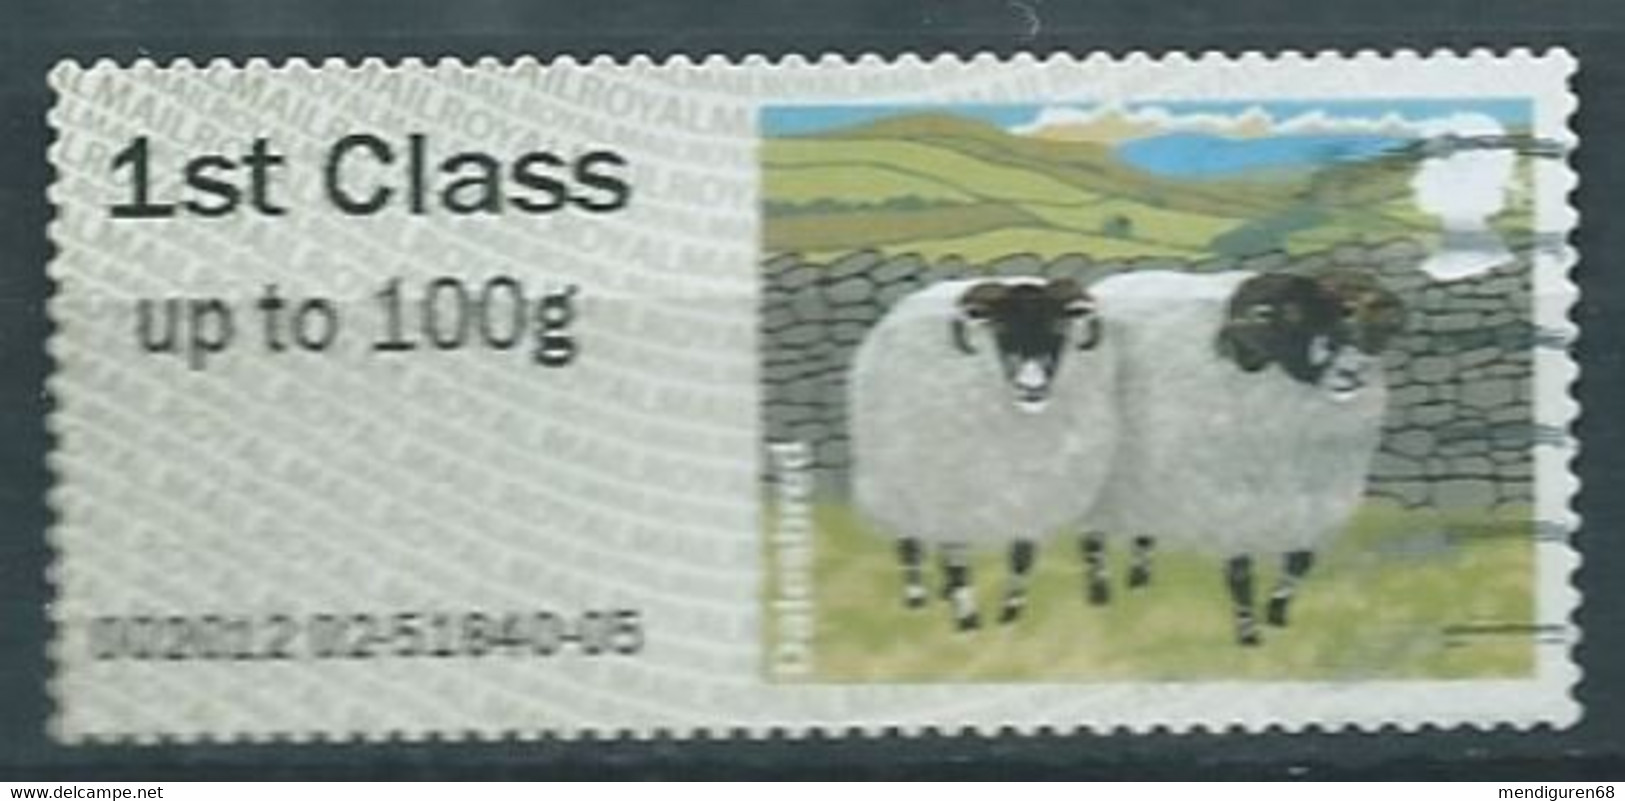 GROSBRITANNIEN GRANDE BRETAGNE GB 2012 POST&GO SHEEP:DALESBRED 1ST CLASS Up To 10g USED PAPER SG TD 30 MI ATM 2 YT TD28 - Post & Go (automaten)